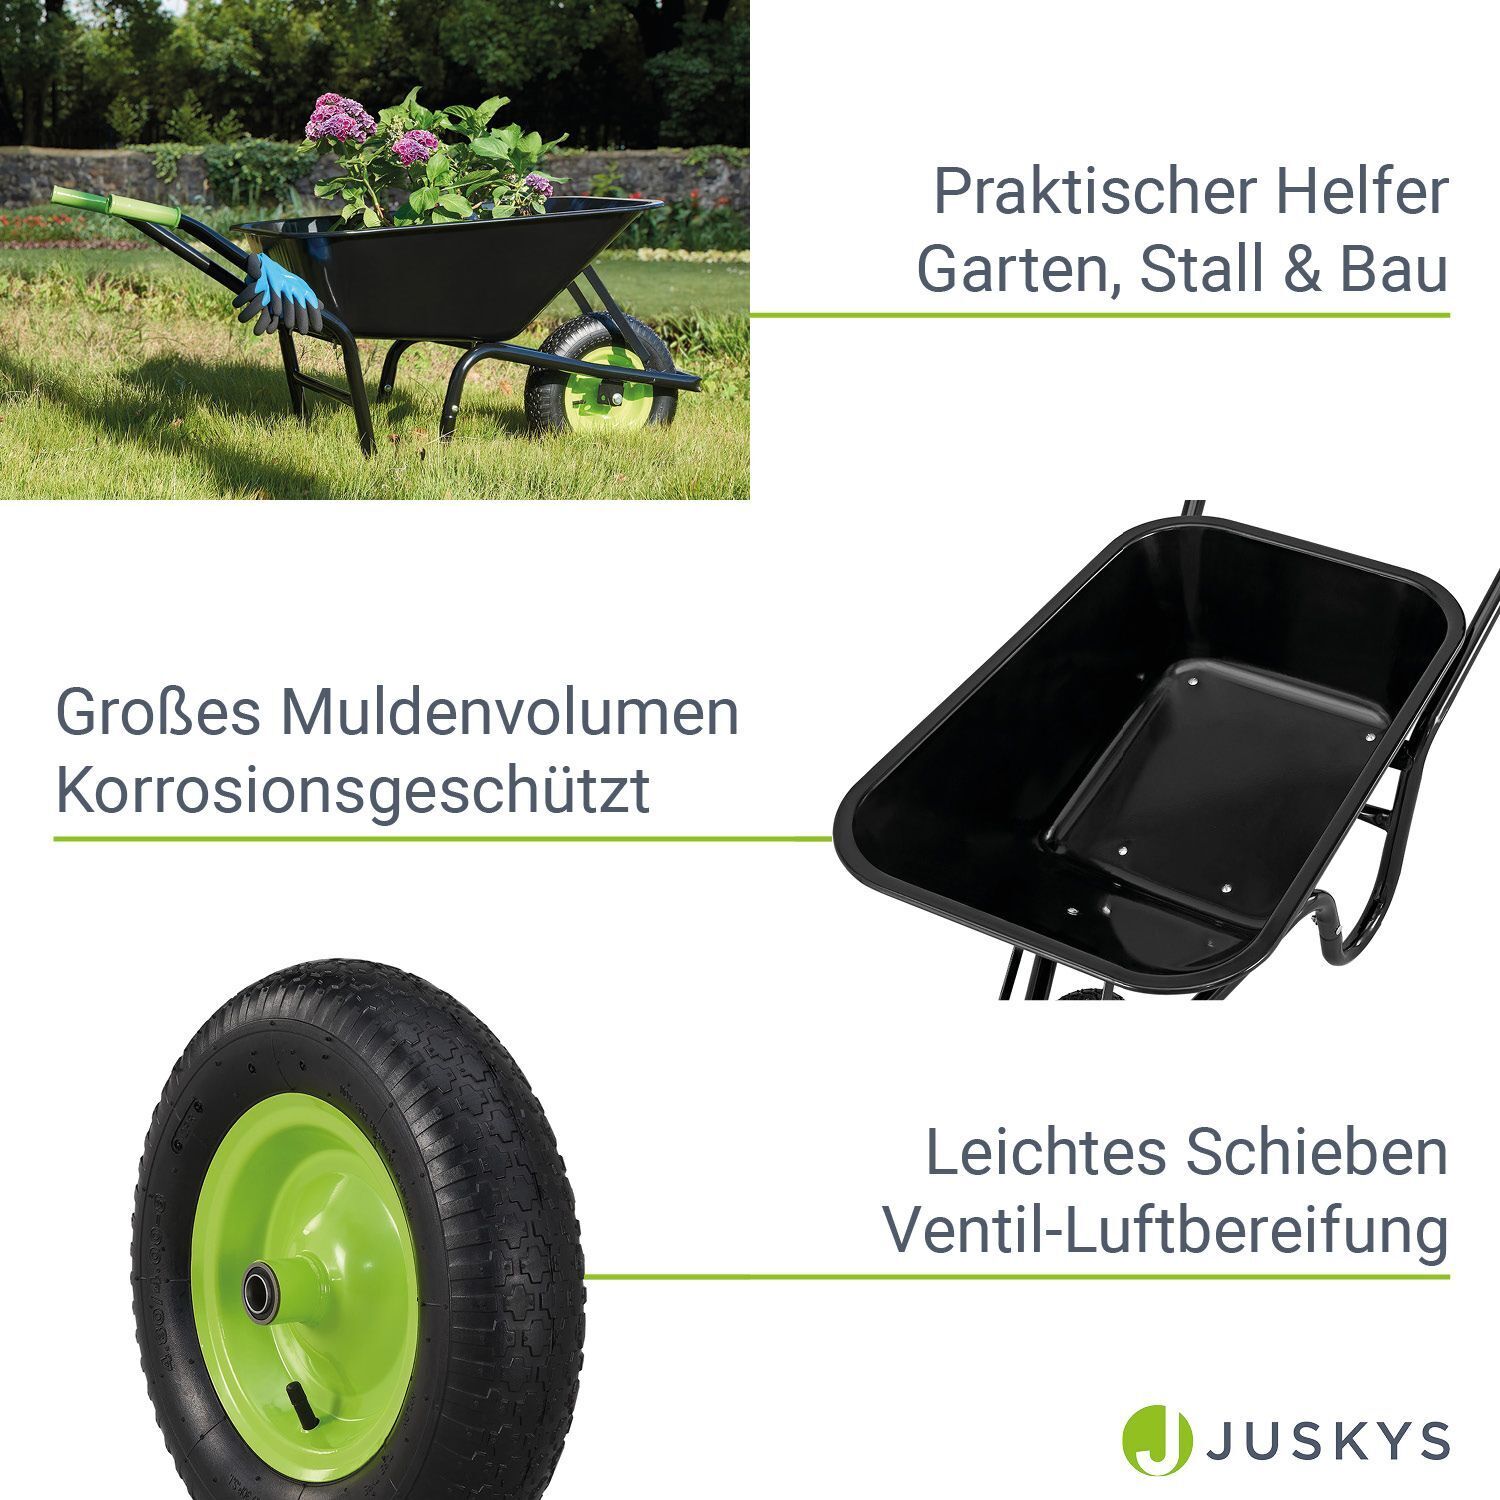 Schubkarre Transportkarre Bauschubkarre Schiebkarre Gartenwagen Metall Juskys